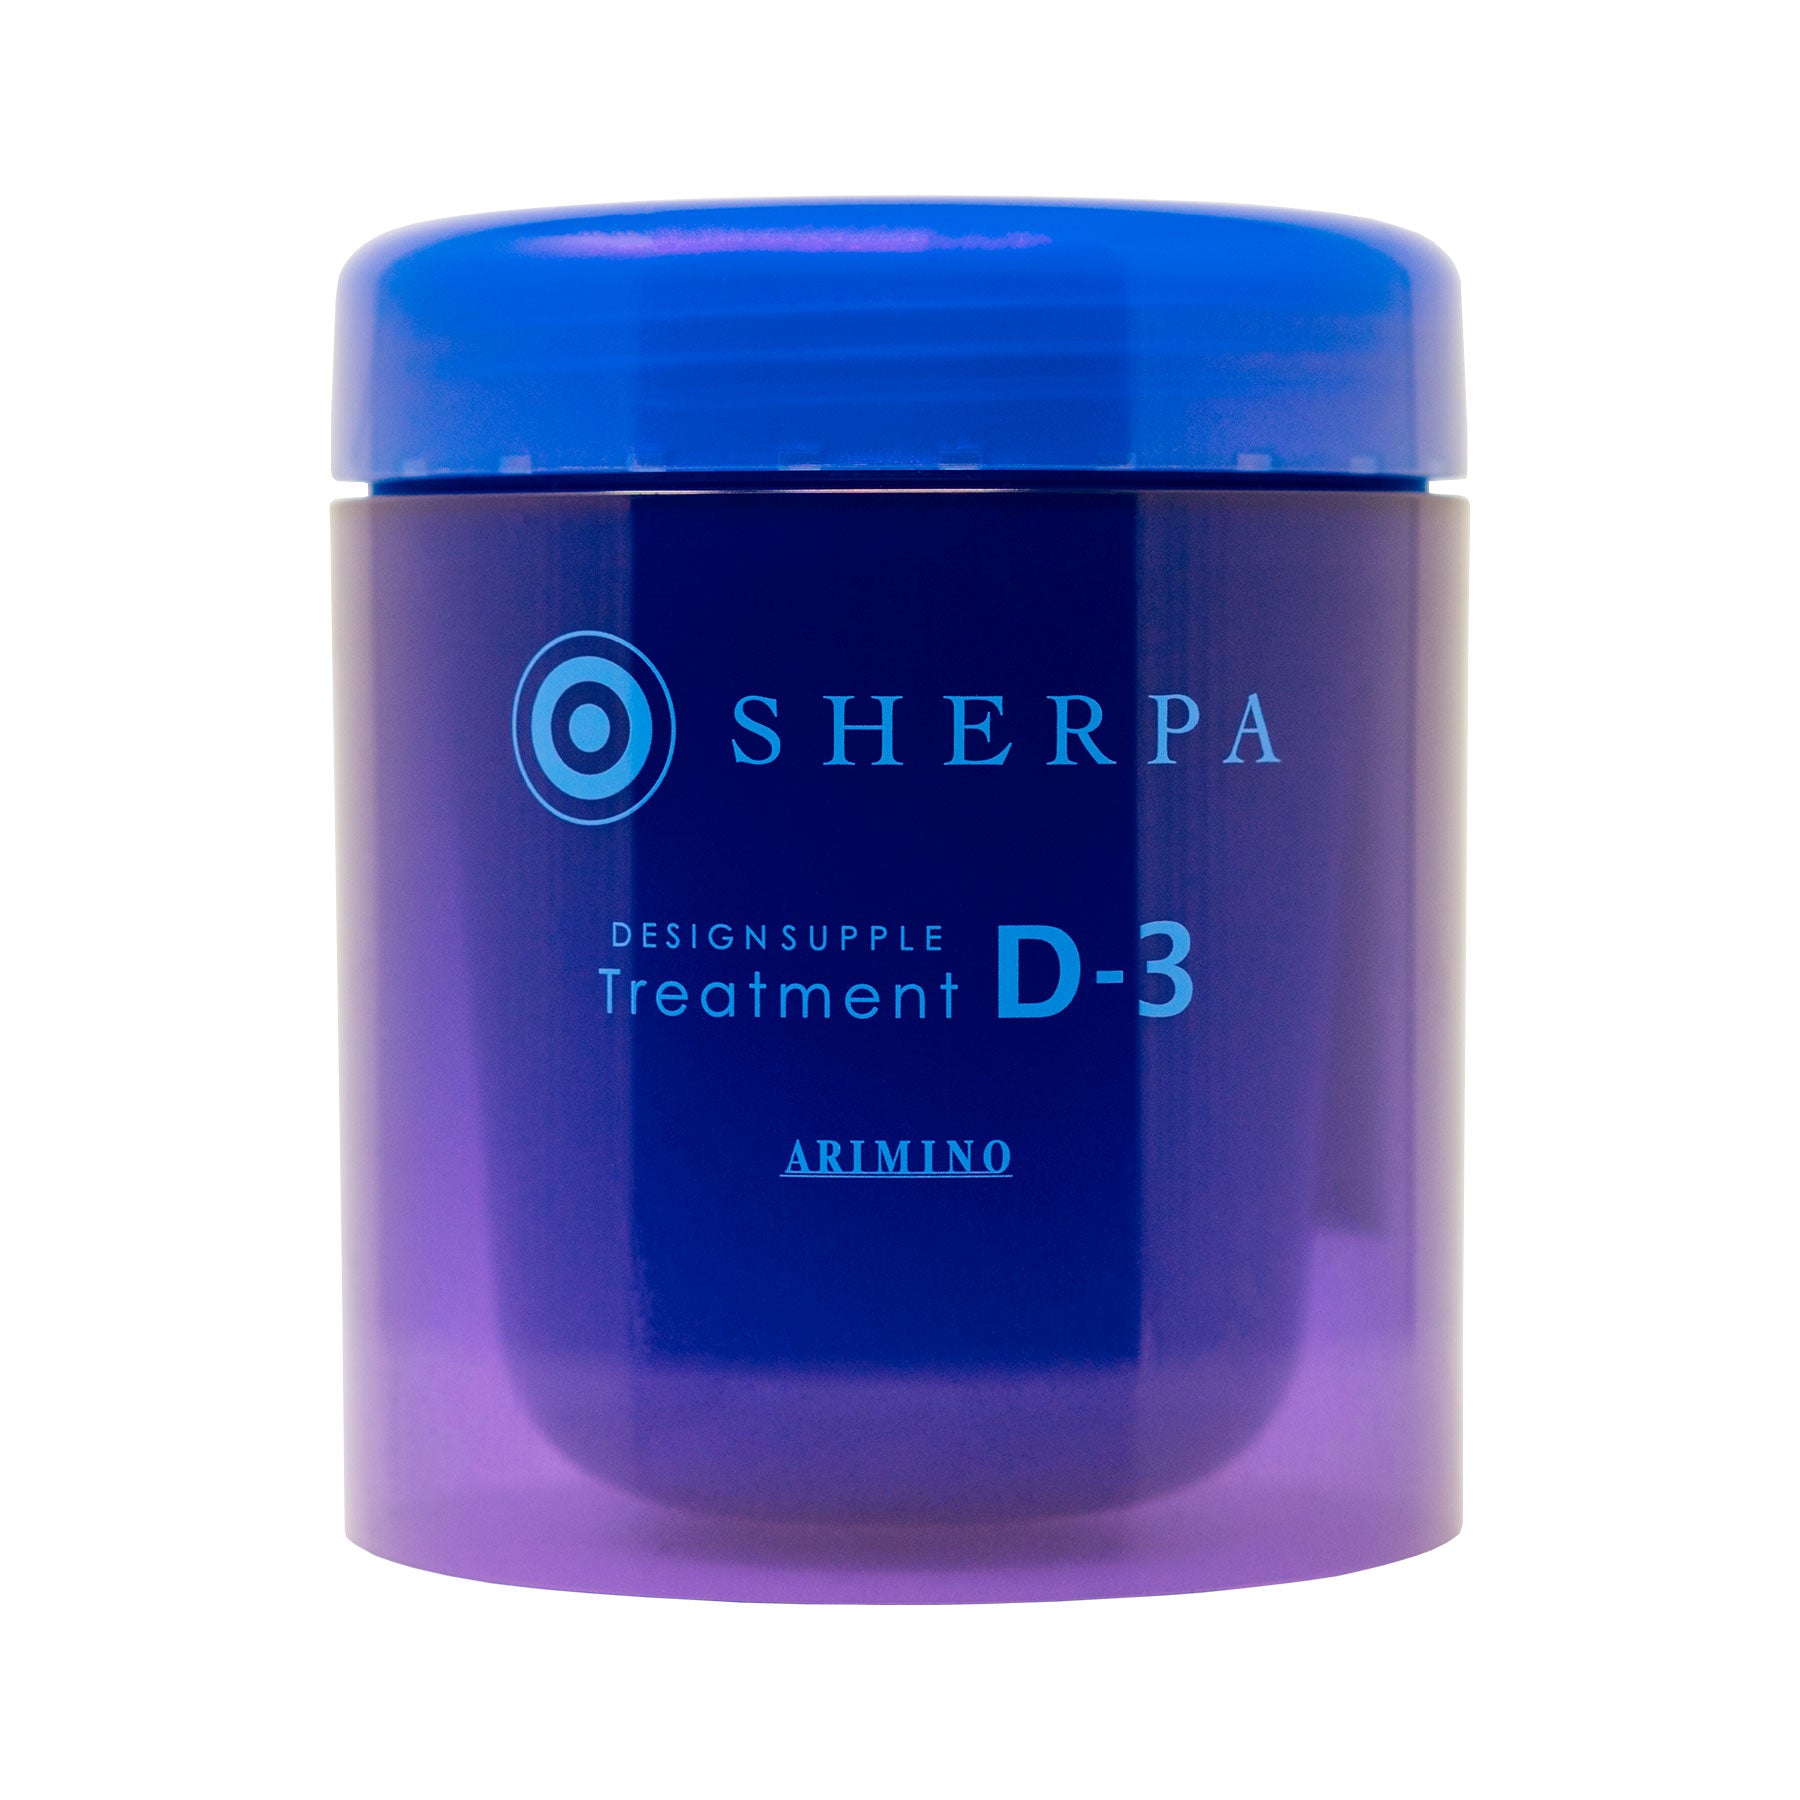 Sherpa Design Supple Treatment D-3